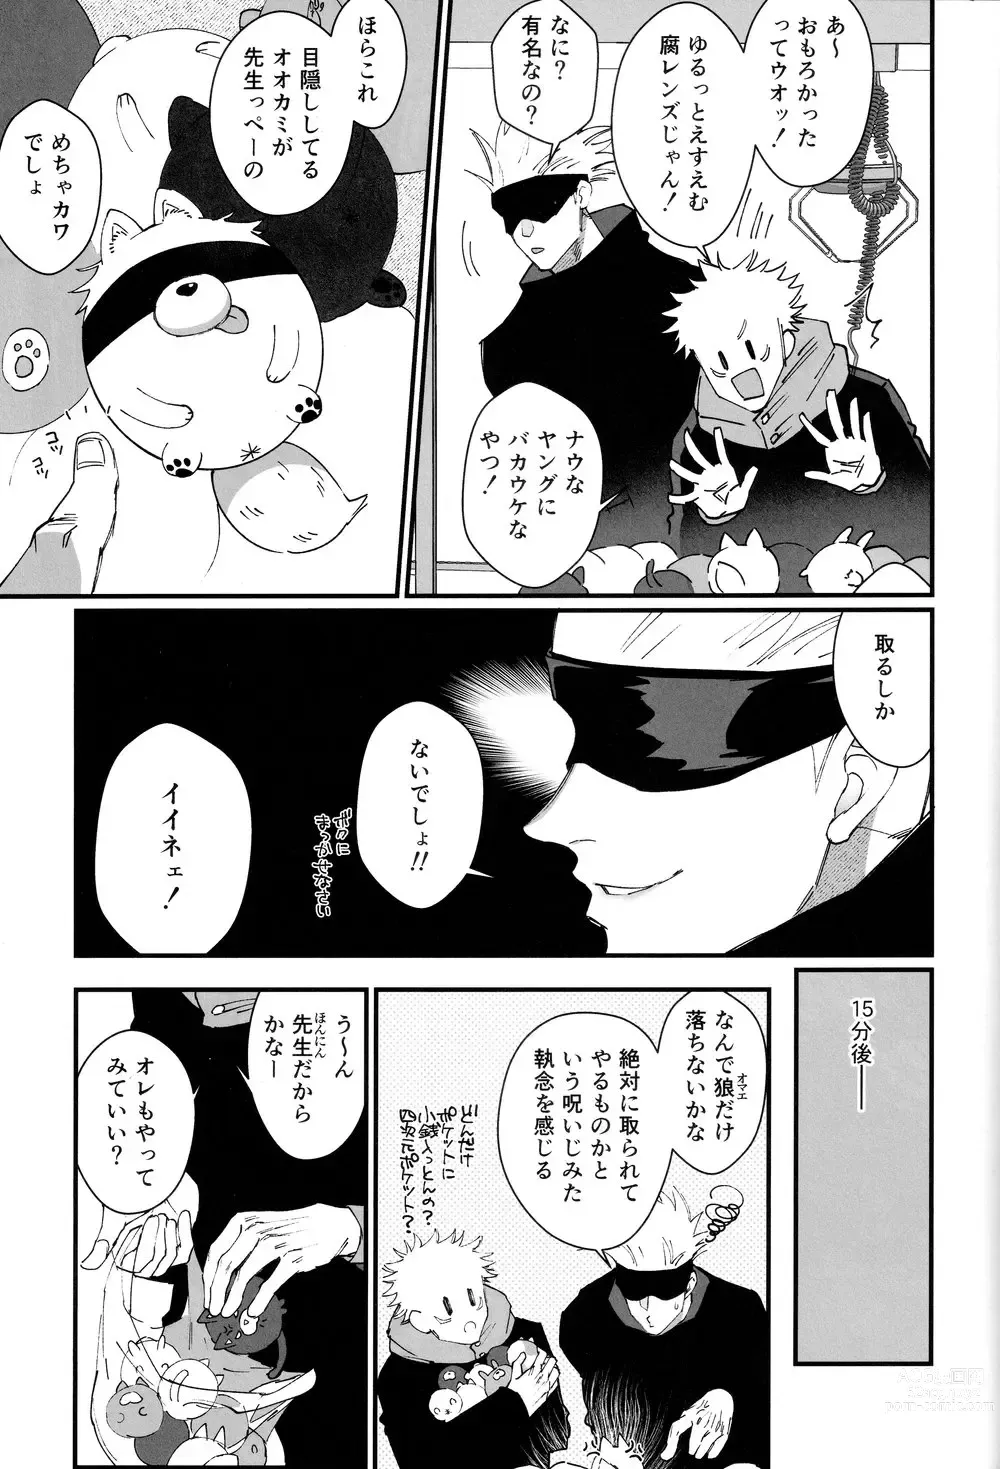 Page 12 of doujinshi Zoku Gachikoi Monster